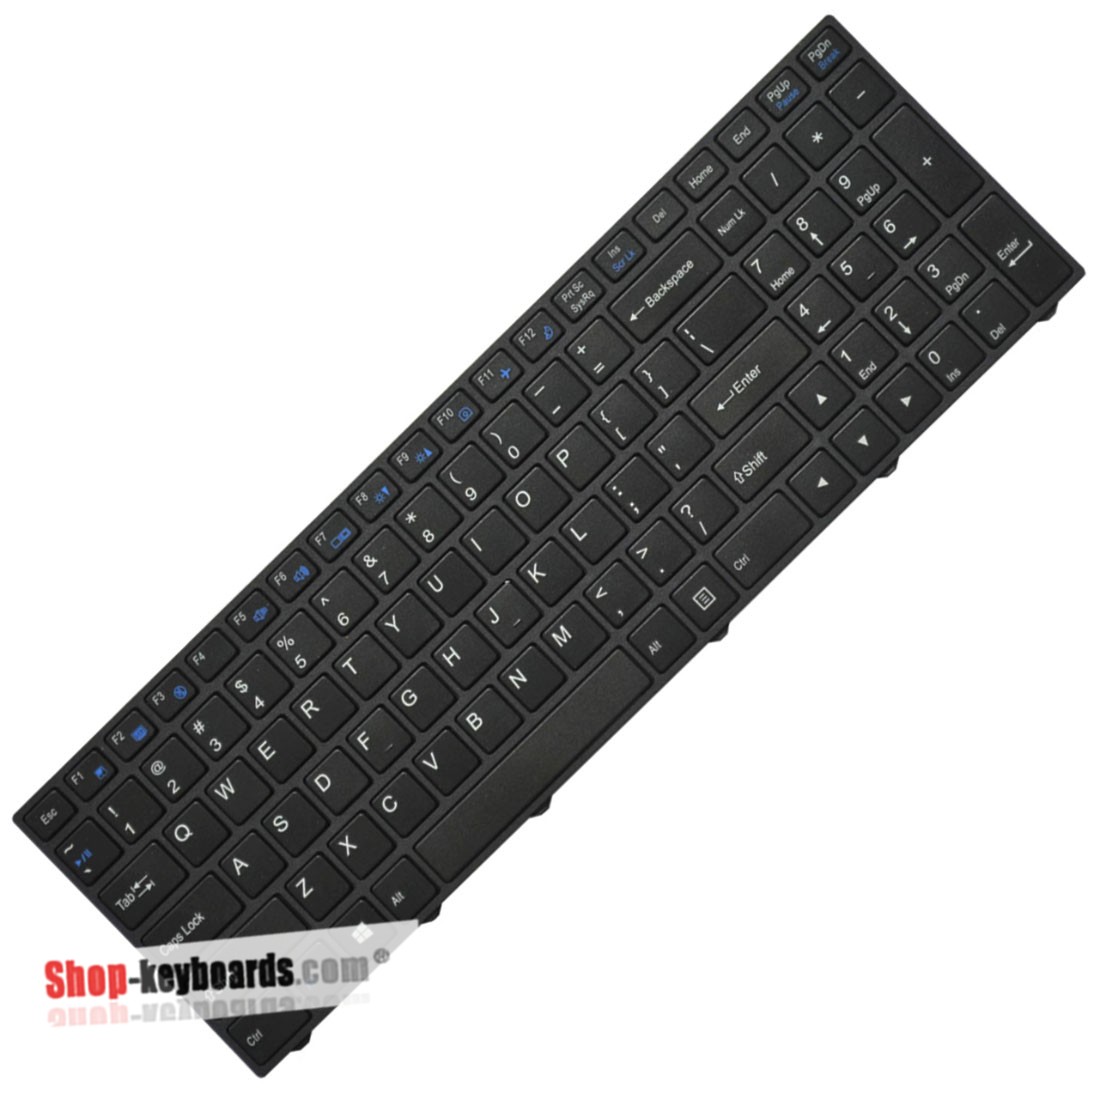 Clevo MP-13M13U4-4302 Keyboard replacement